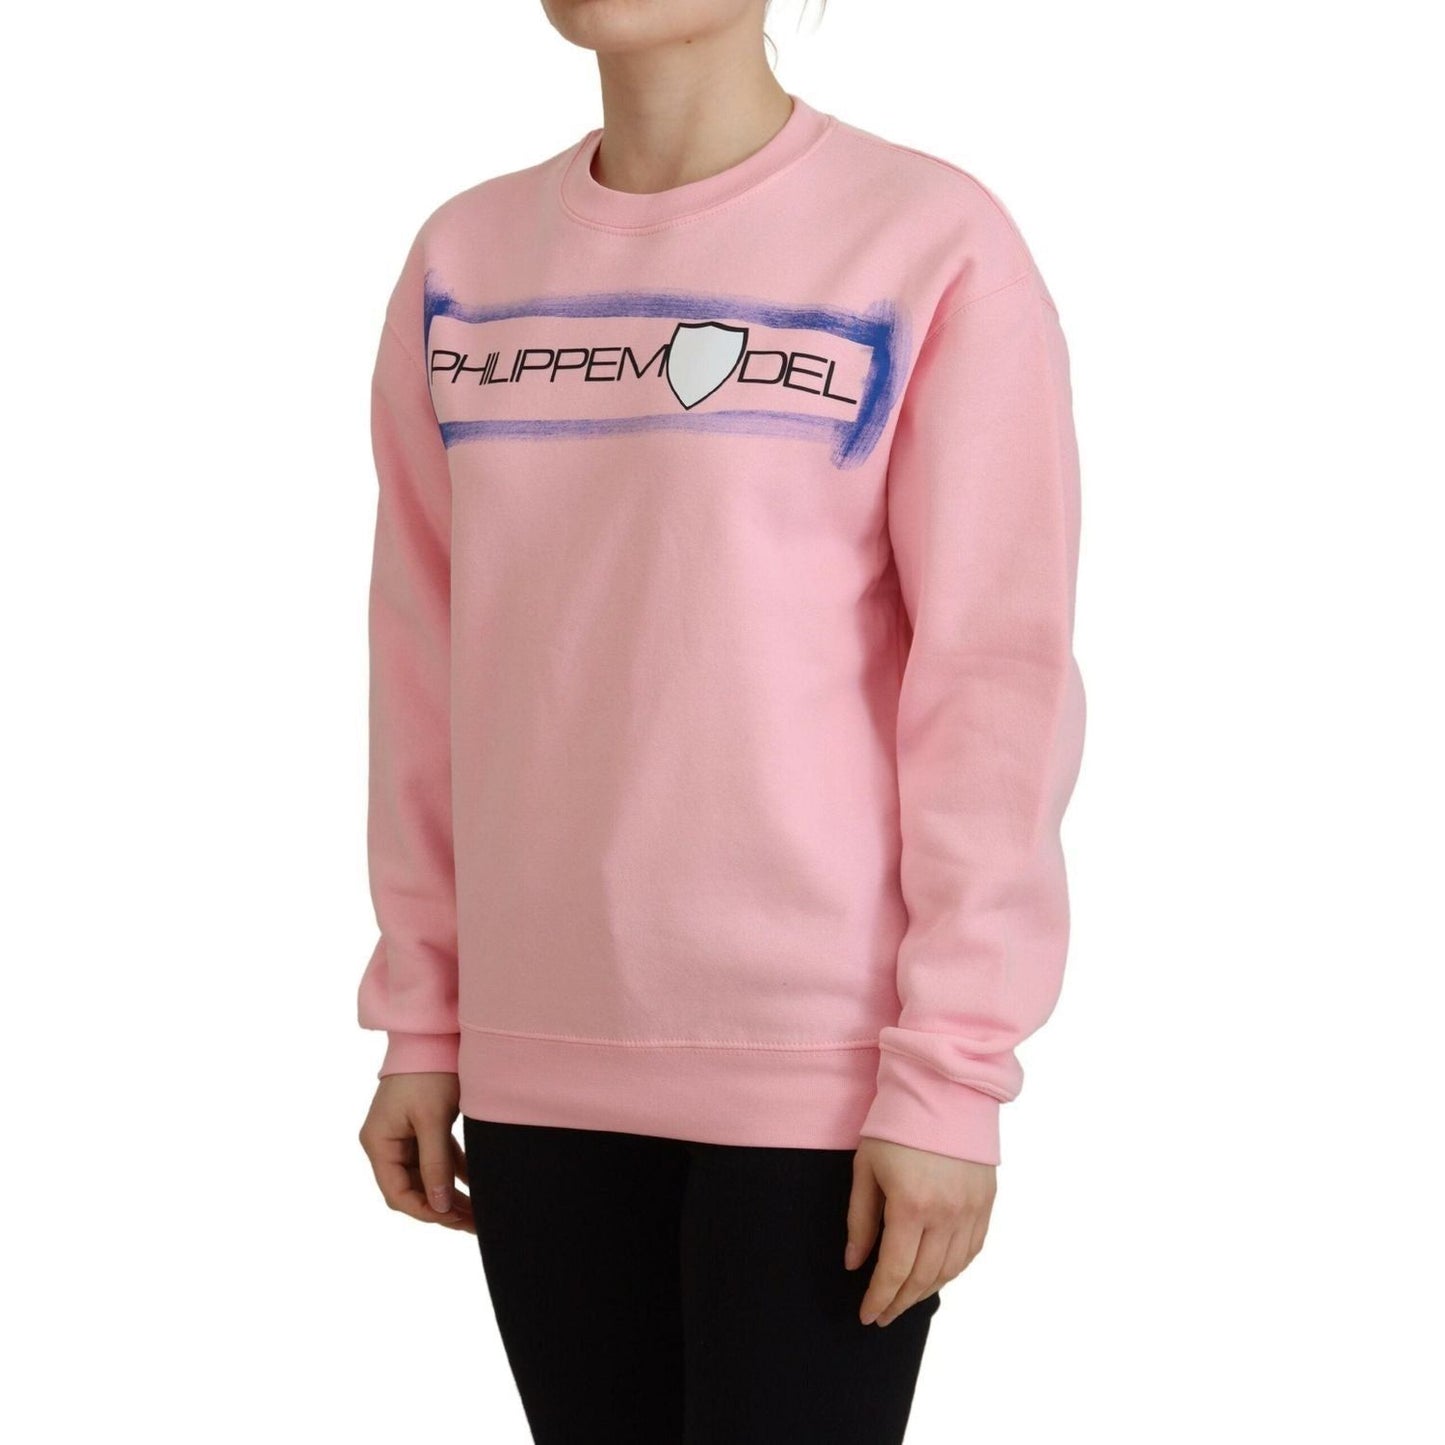 Philippe Model Elegant Pink Long Sleeve Pullover Sweater pink-printed-long-sleeves-pullover-sweater IMG_9290-1-scaled-26871349-a74.jpg